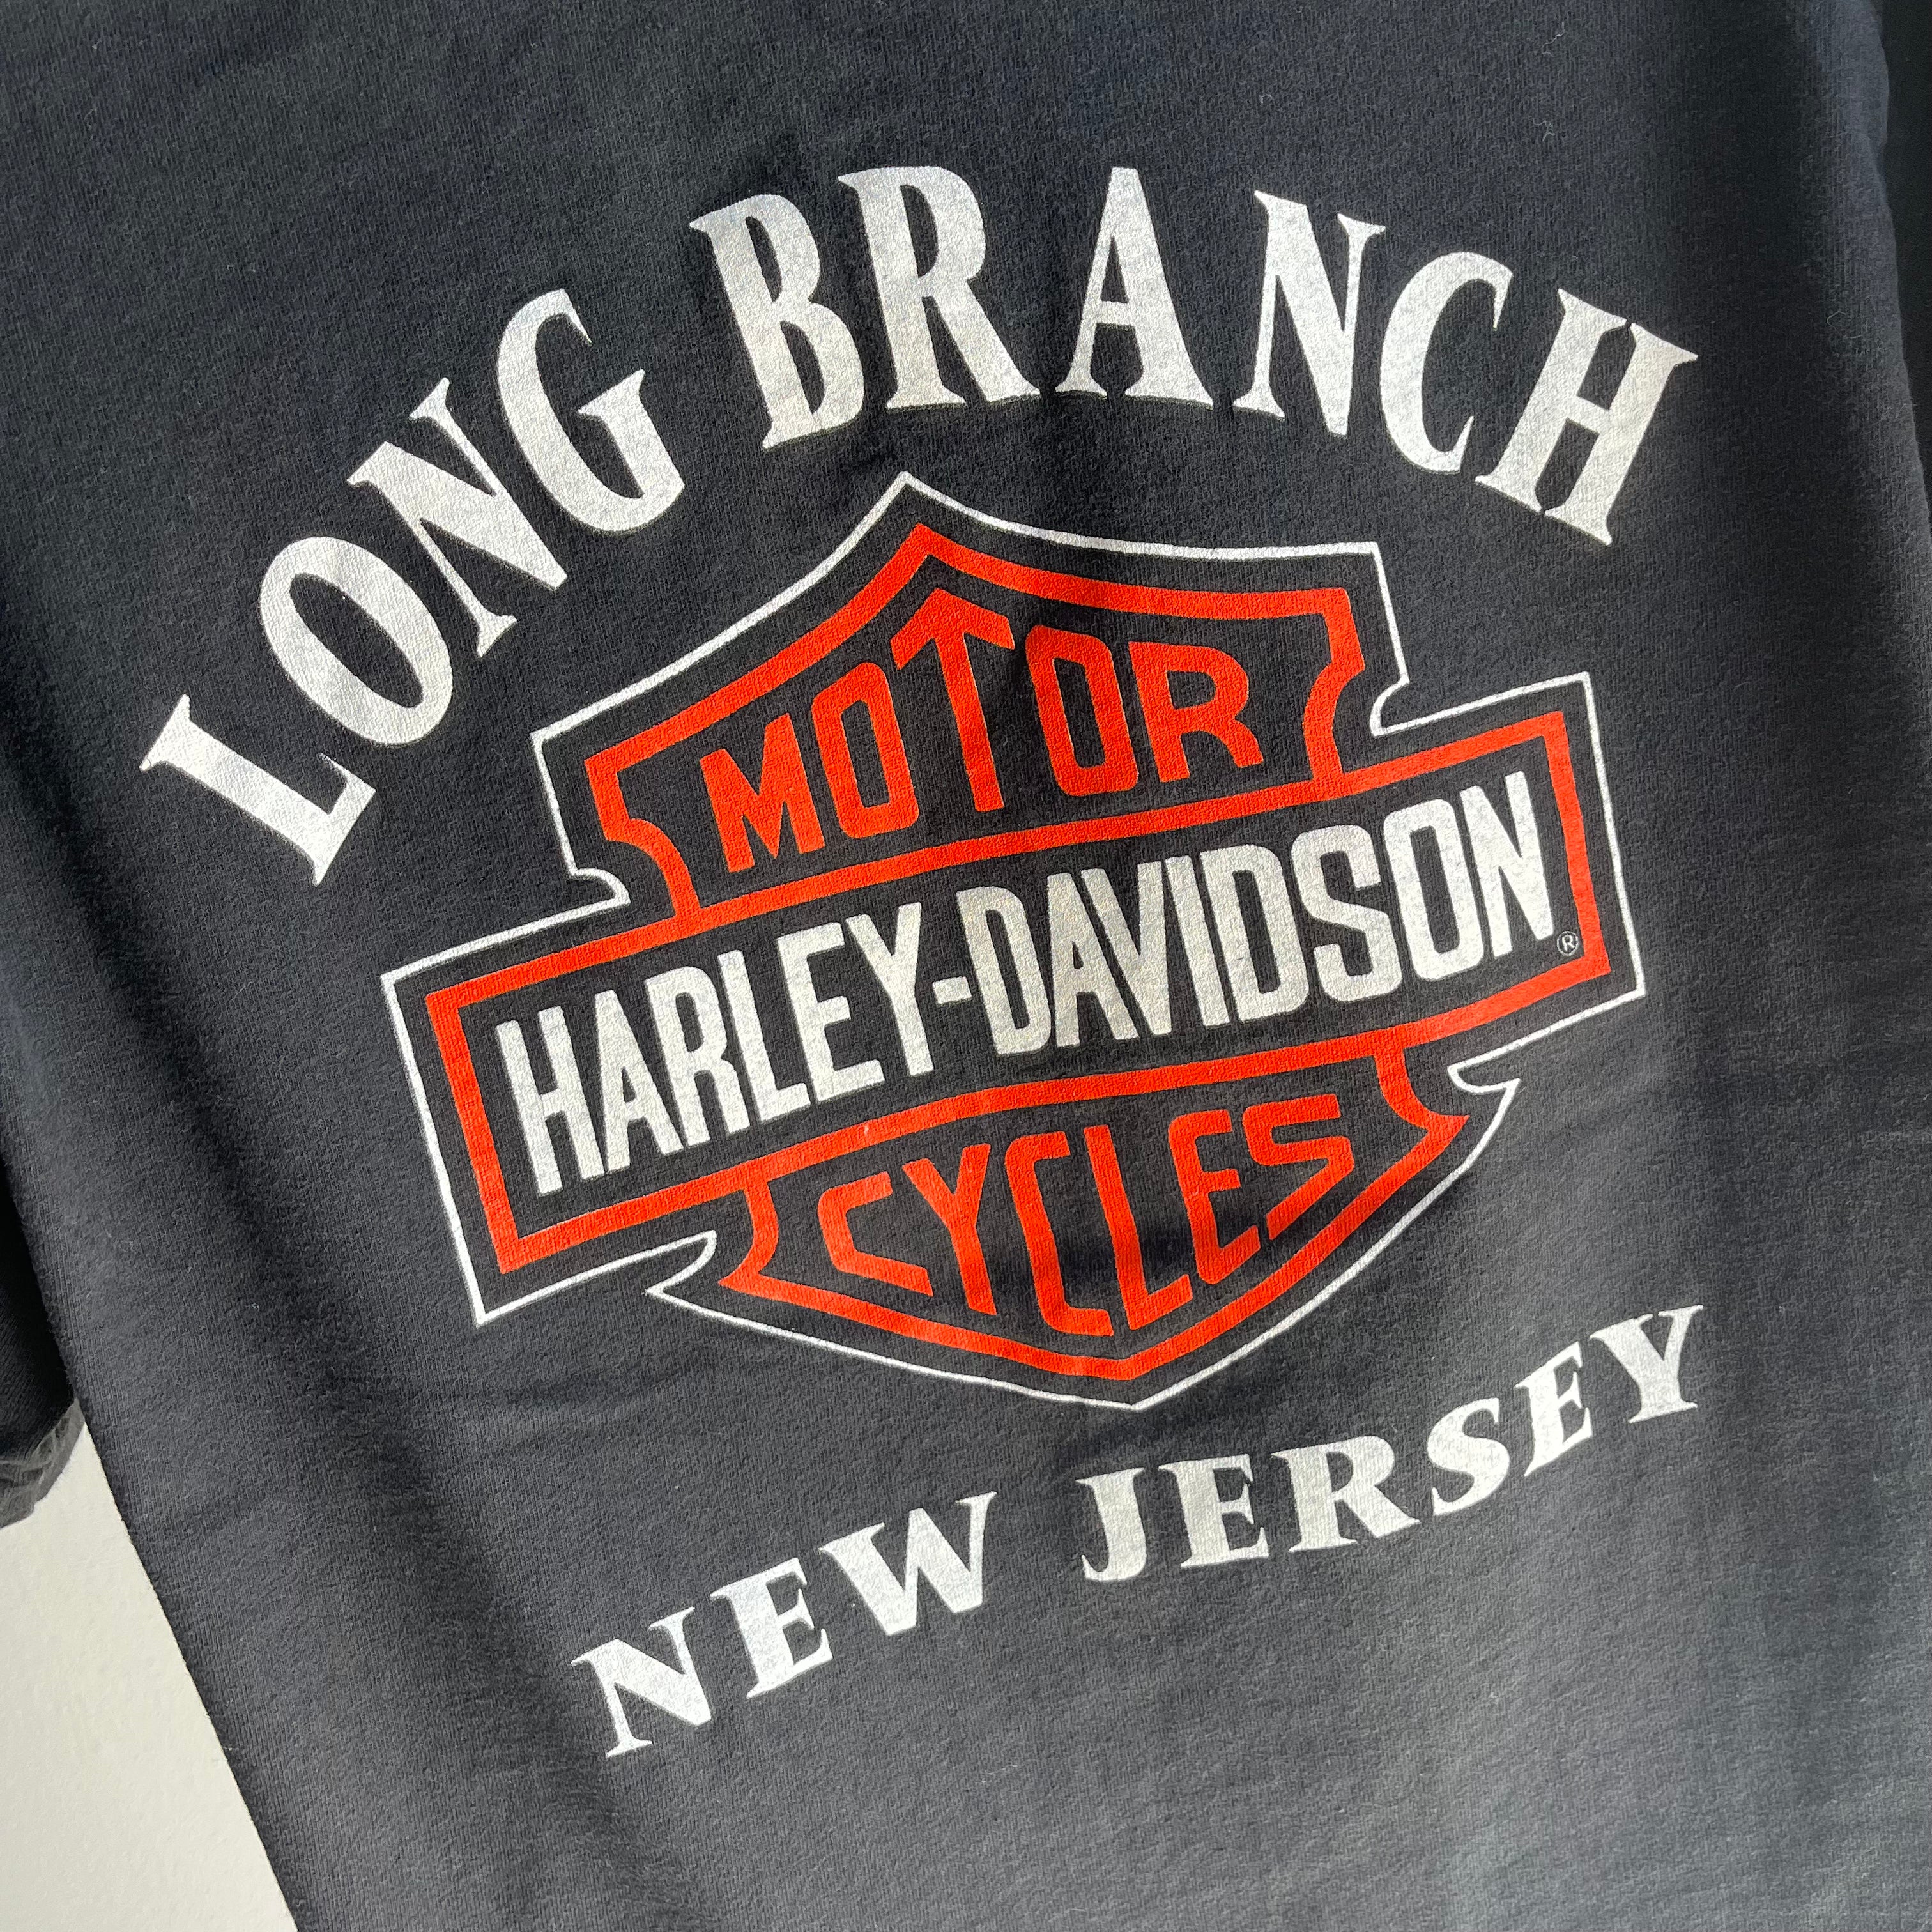 1992 Long Branch, New Jersey Harley DIY Crop